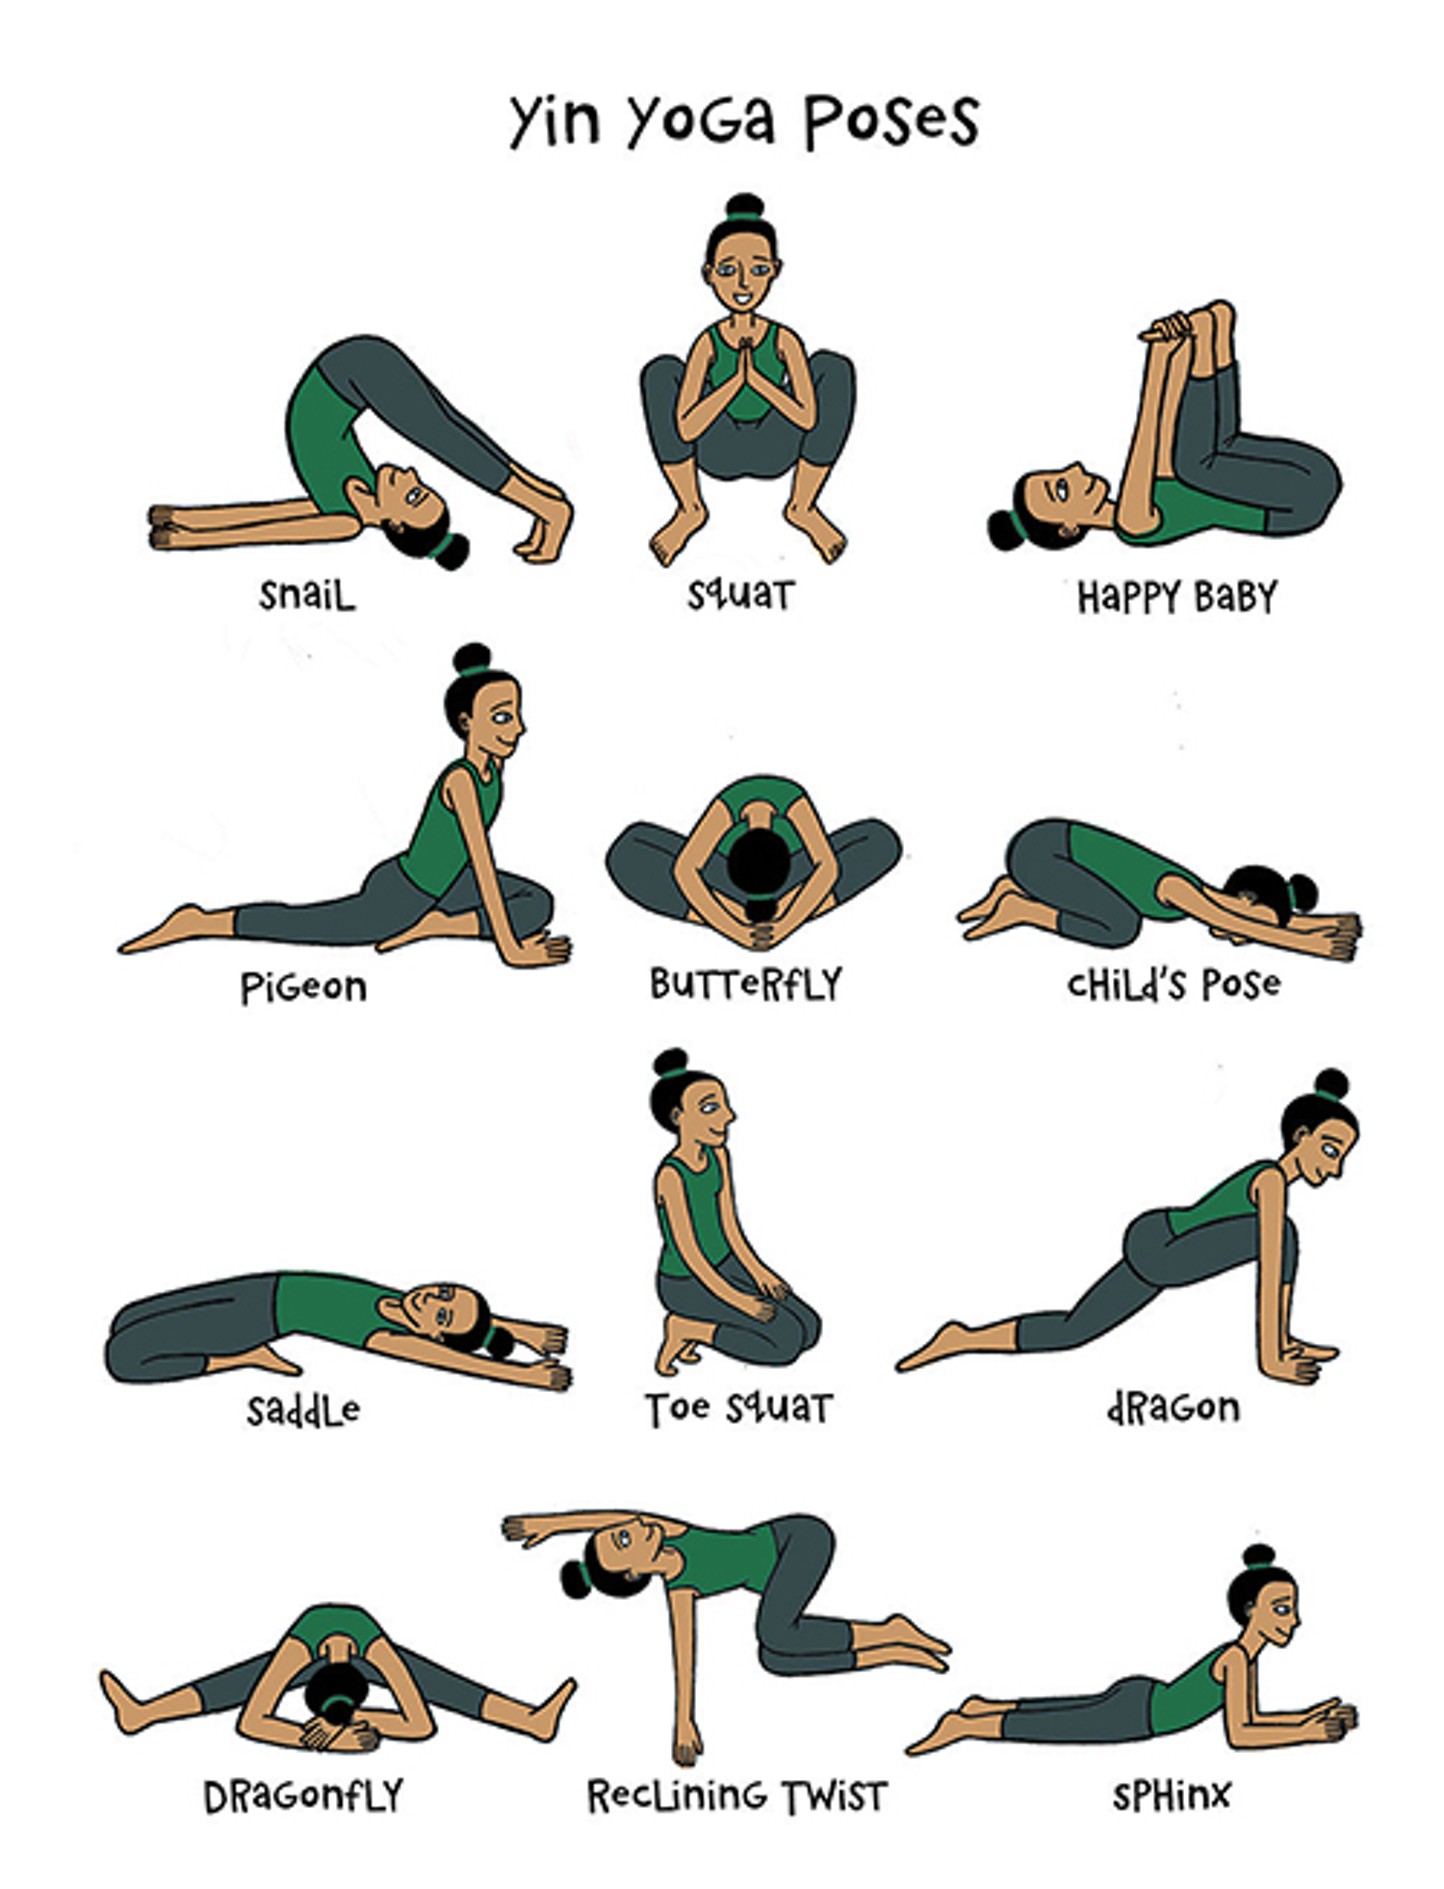 Turning Inward with Yin Yoga, General Wellness